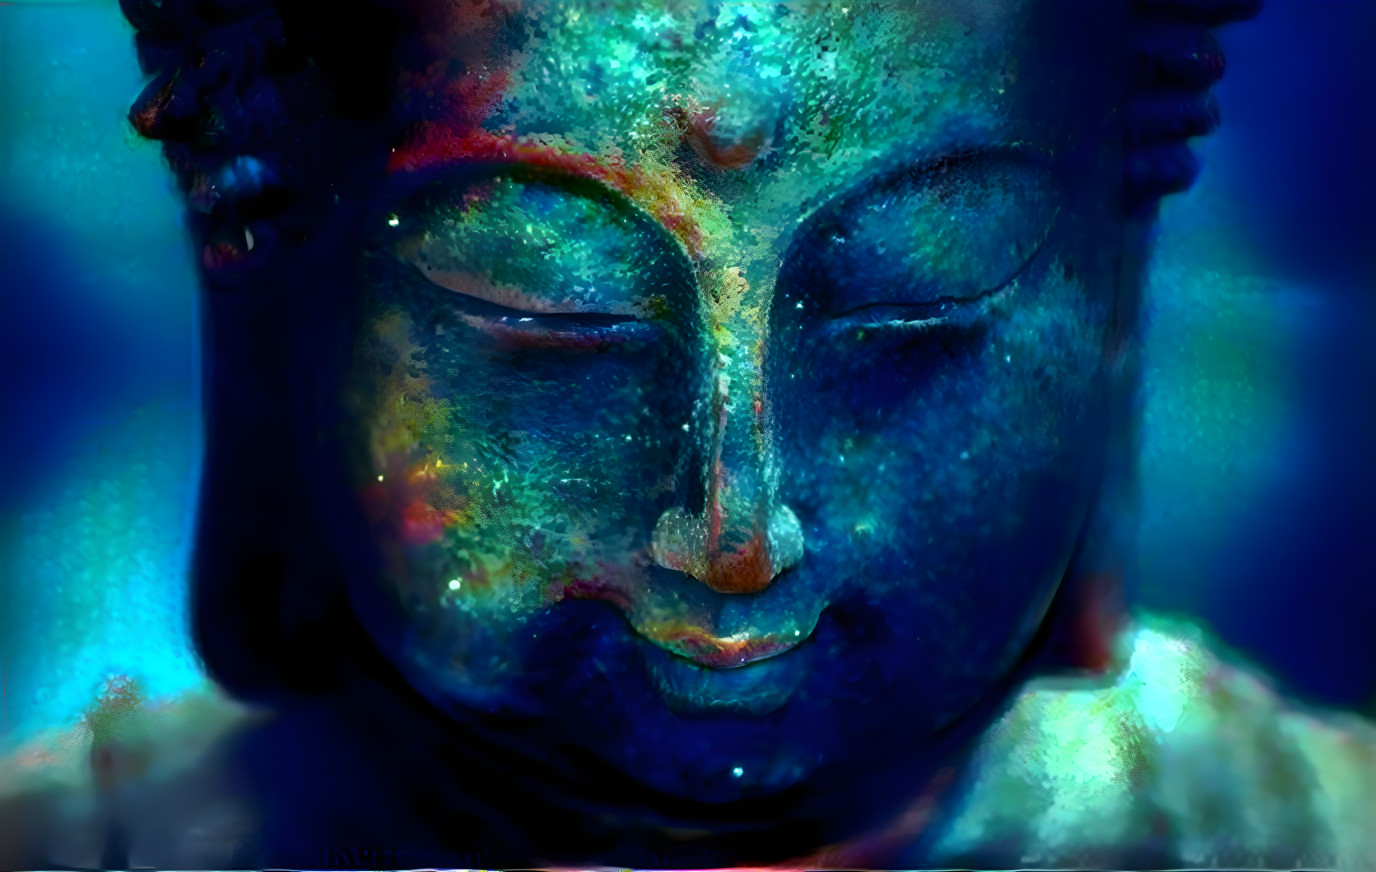 The Blue Buddha